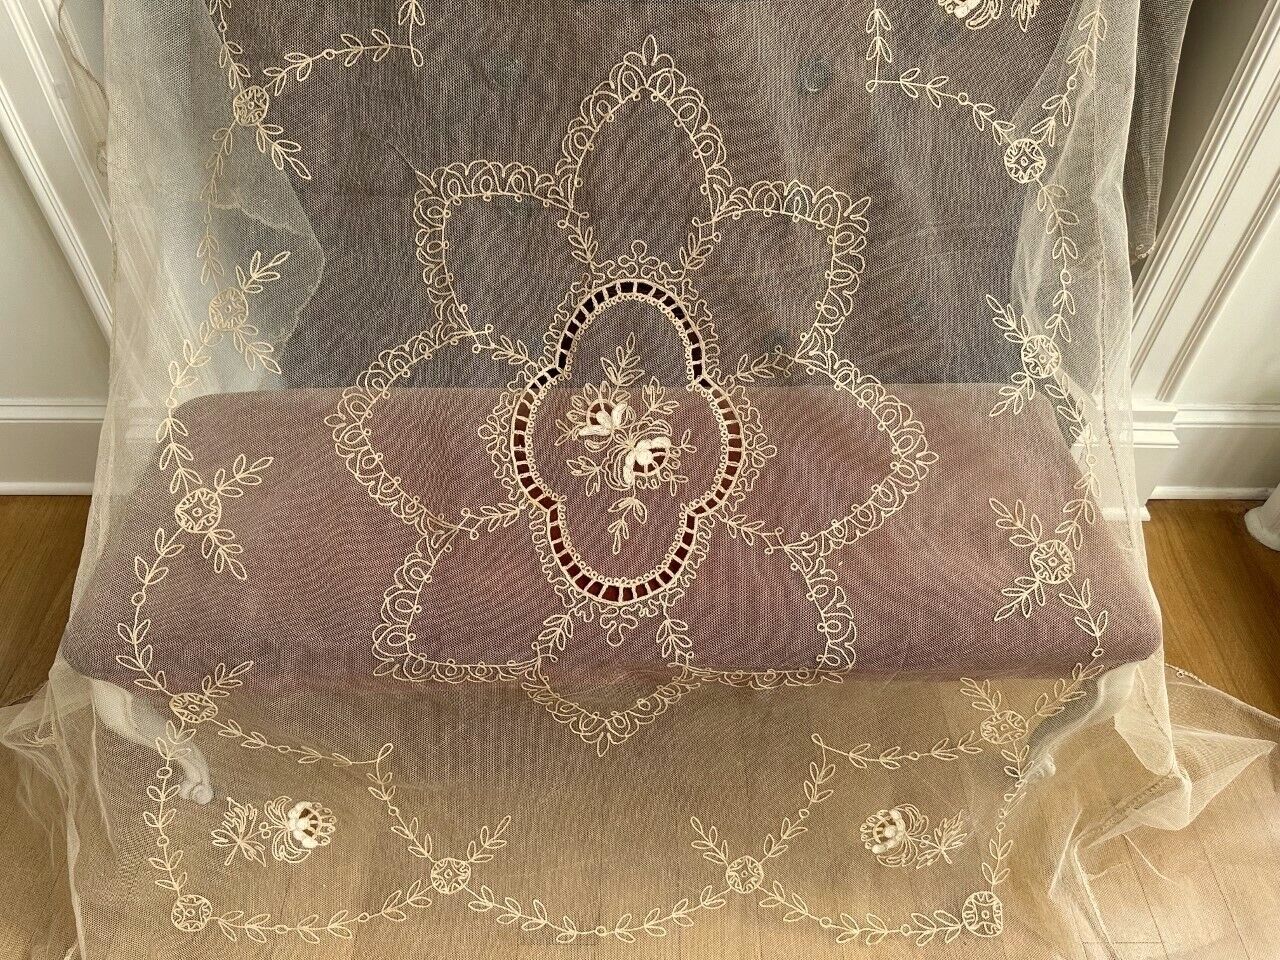 Antique Vintage Lace Bedspread- HANDMADE SWISS TAMBOUR NET LACE BEDSPREAD PANEL